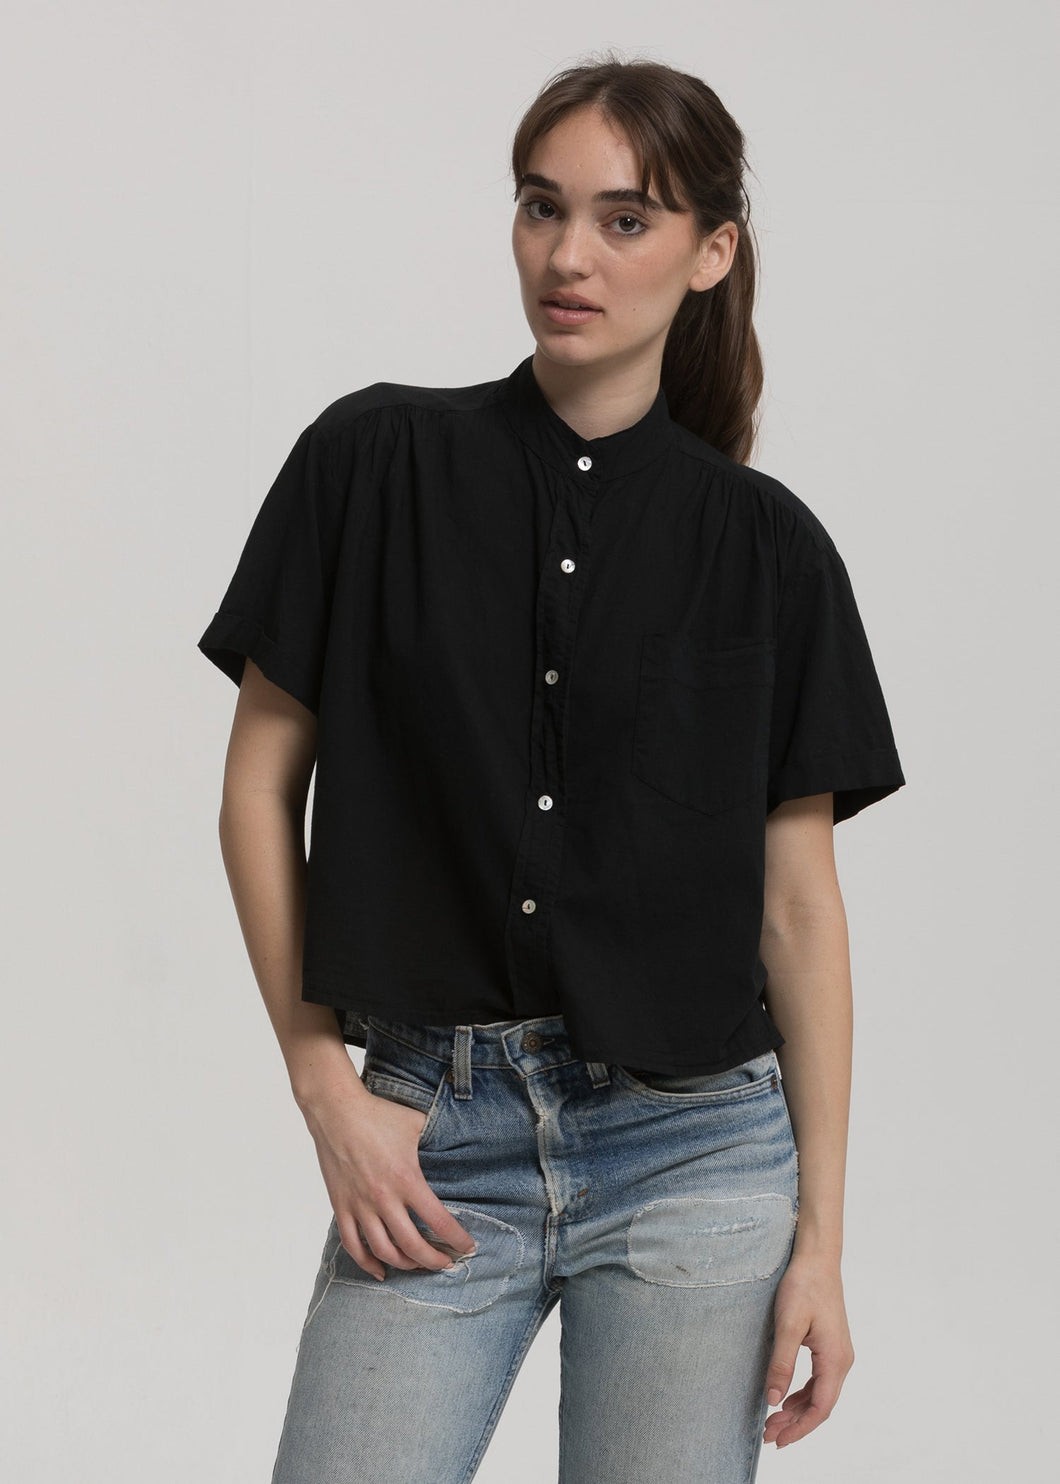 Louella Shirt in Black